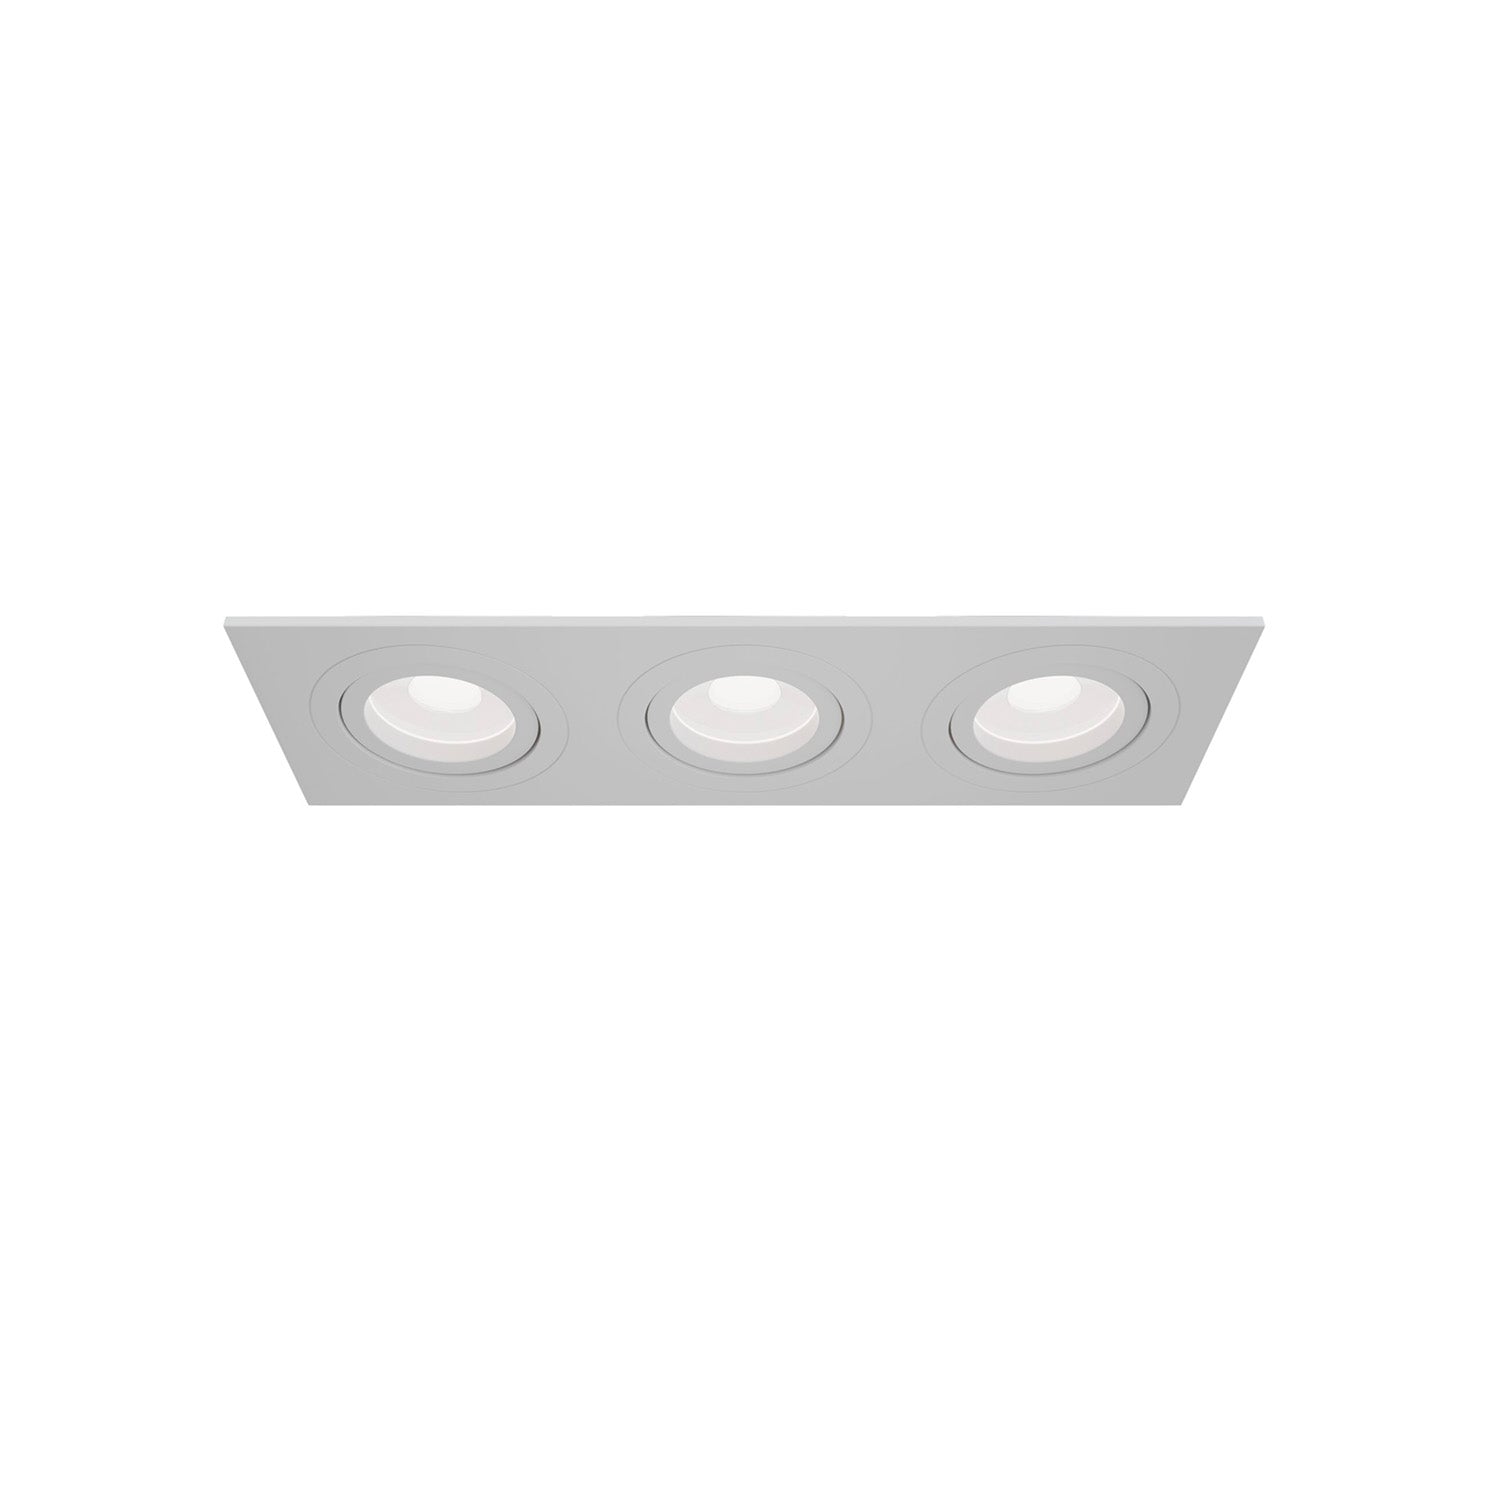 ATOM D - Triple black, white or silver pivoting recessed spotlight